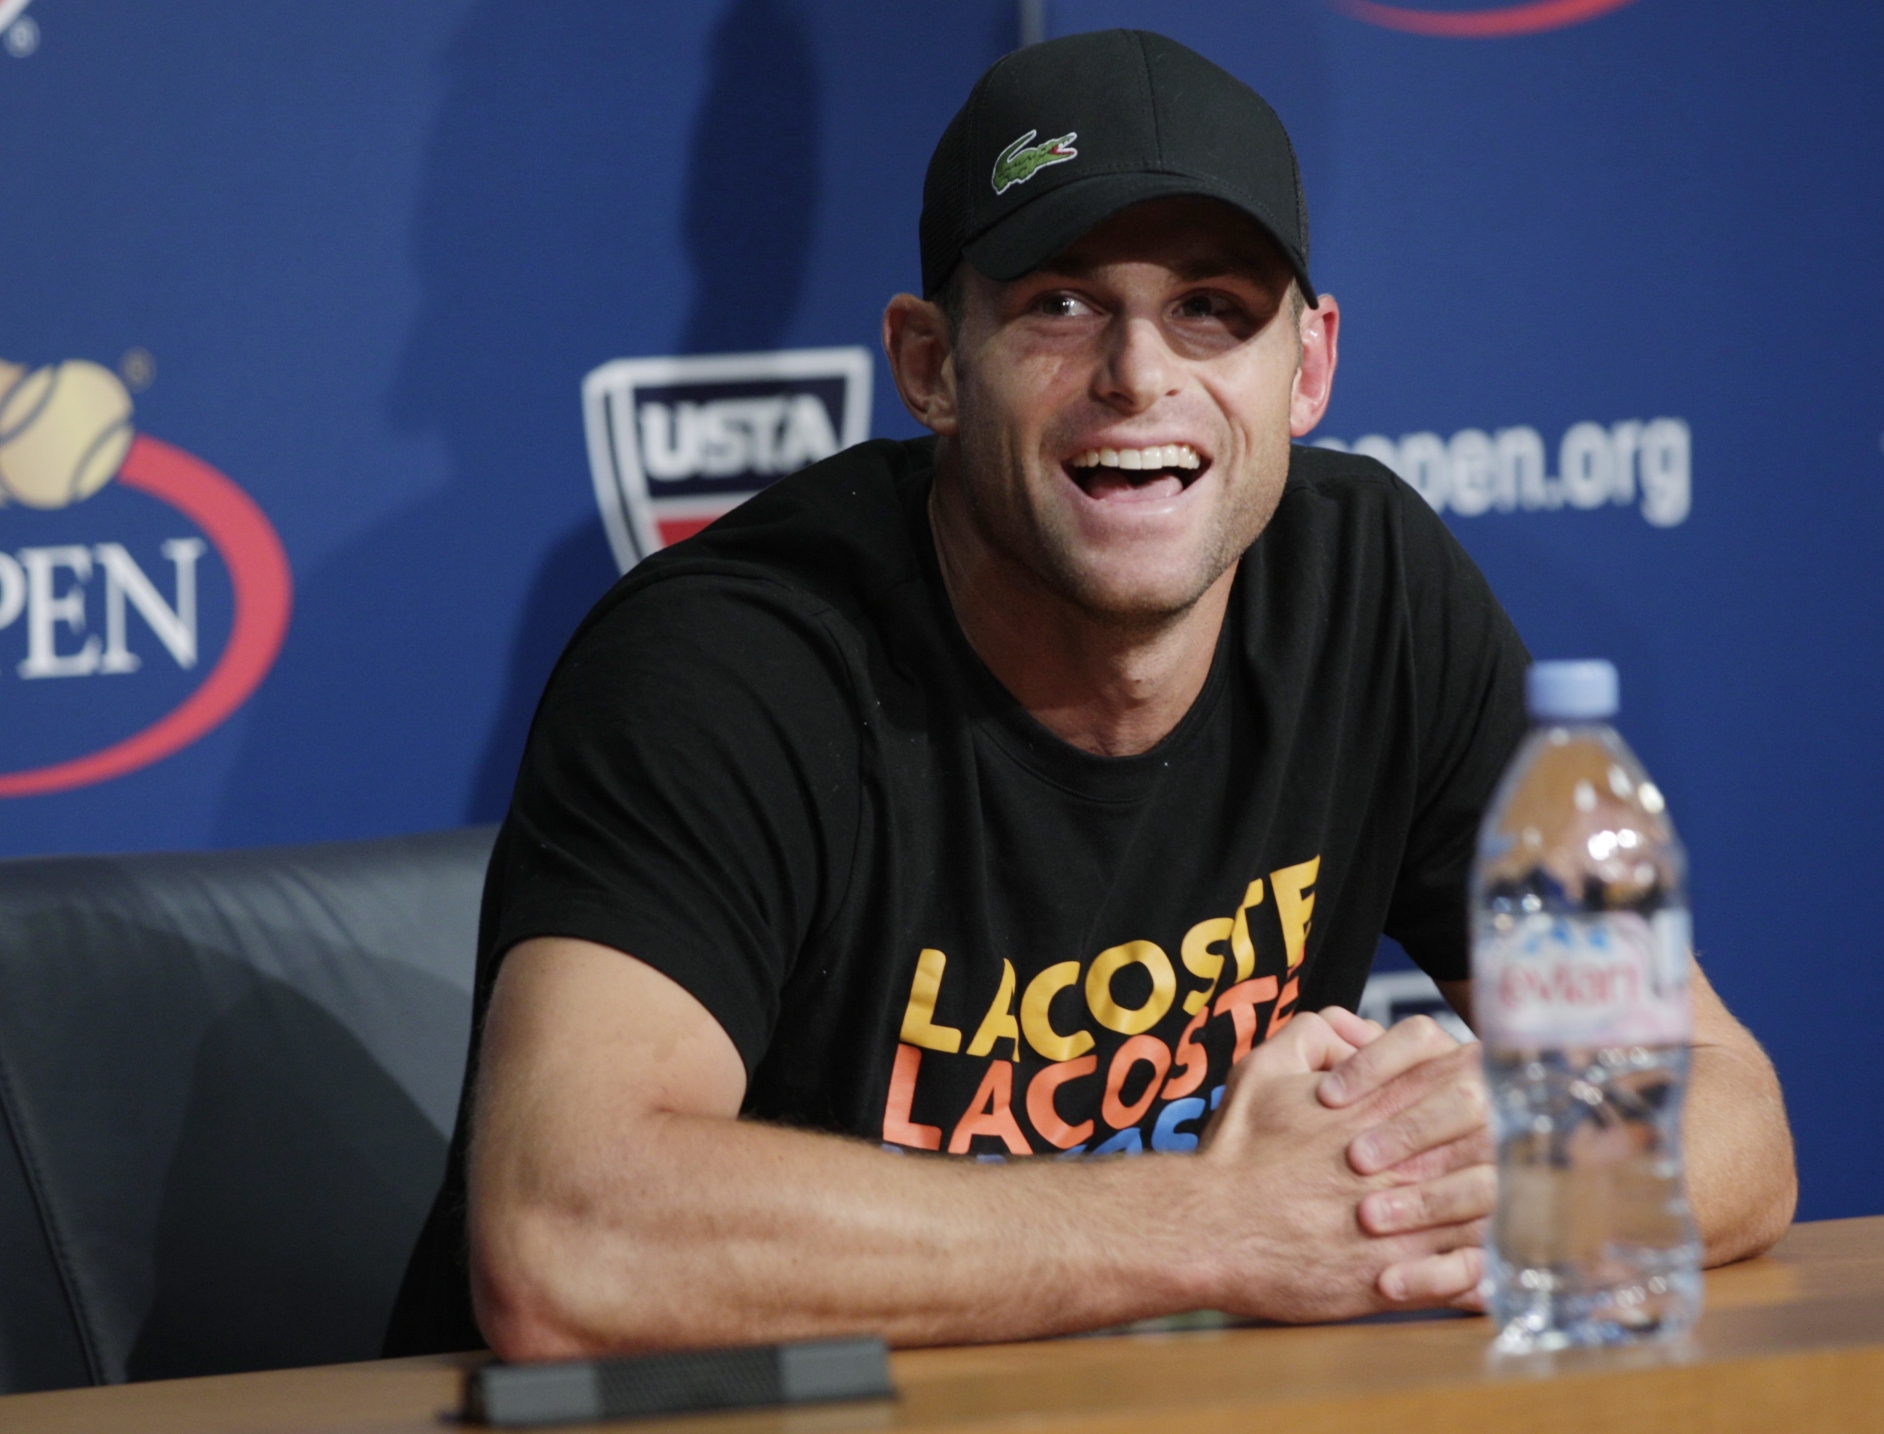 oddick said he pinned Djokovic up against a locker. Photo: AP